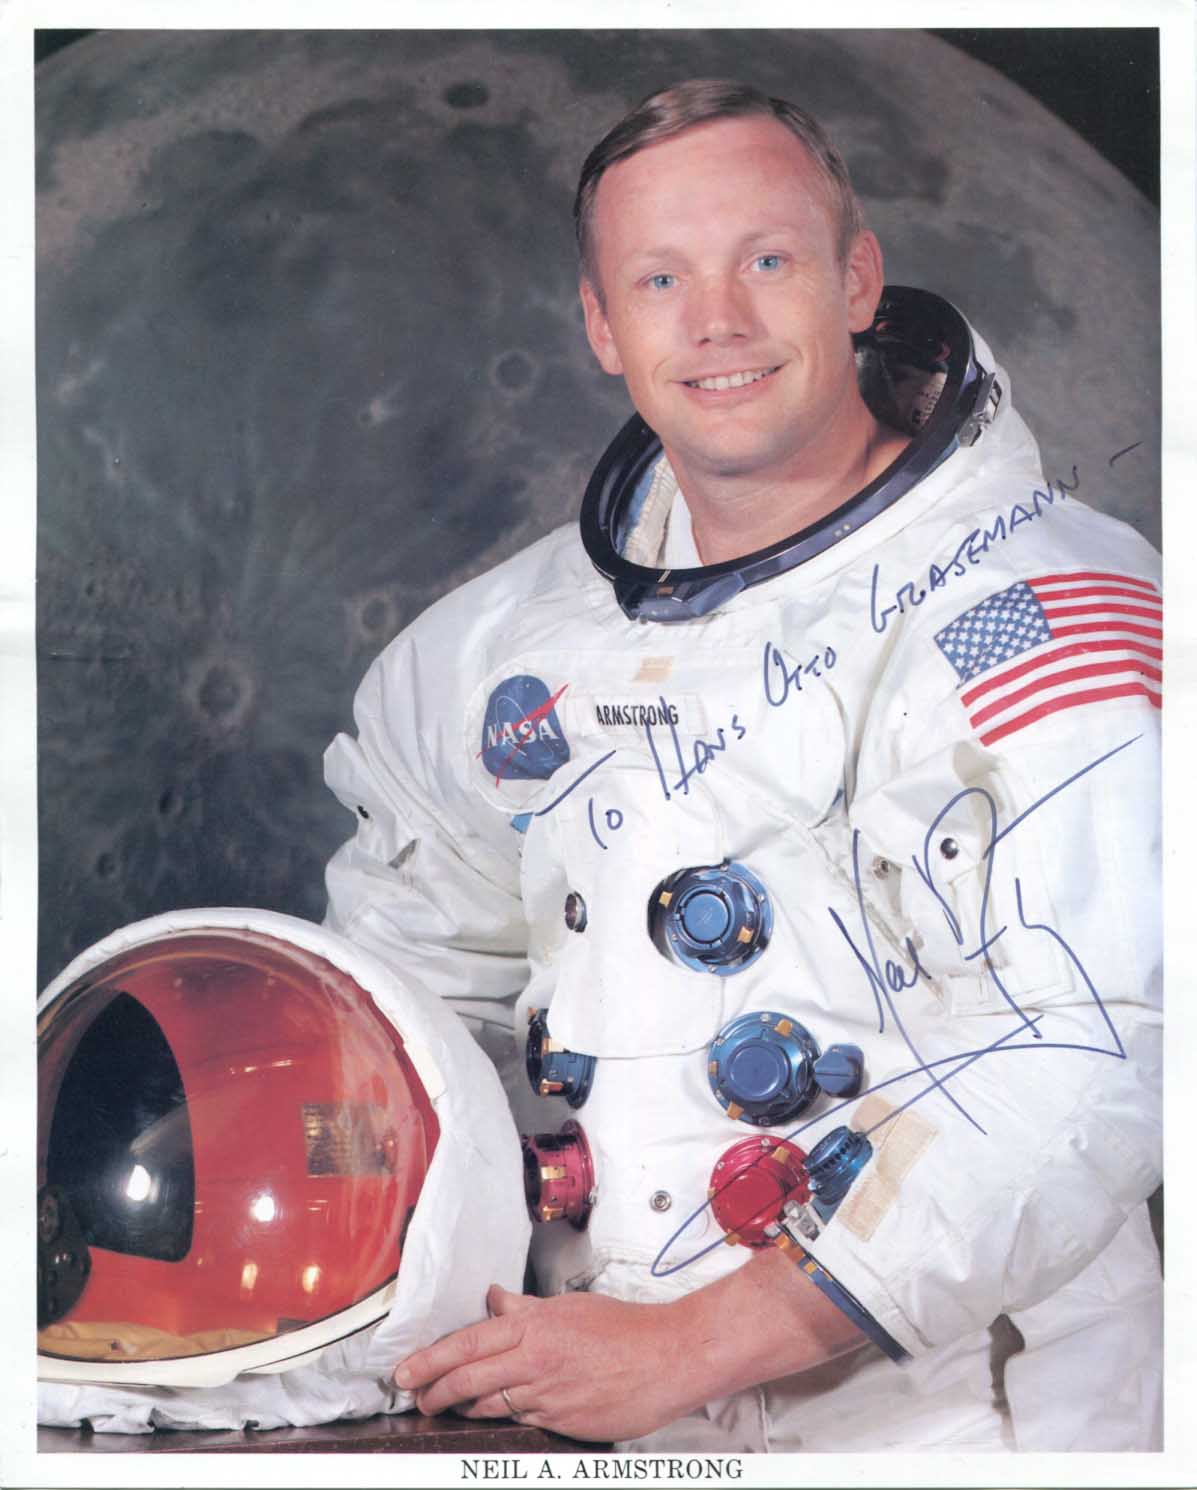 Neil Armstrong Autograph Autogramm | ID 7829210529941